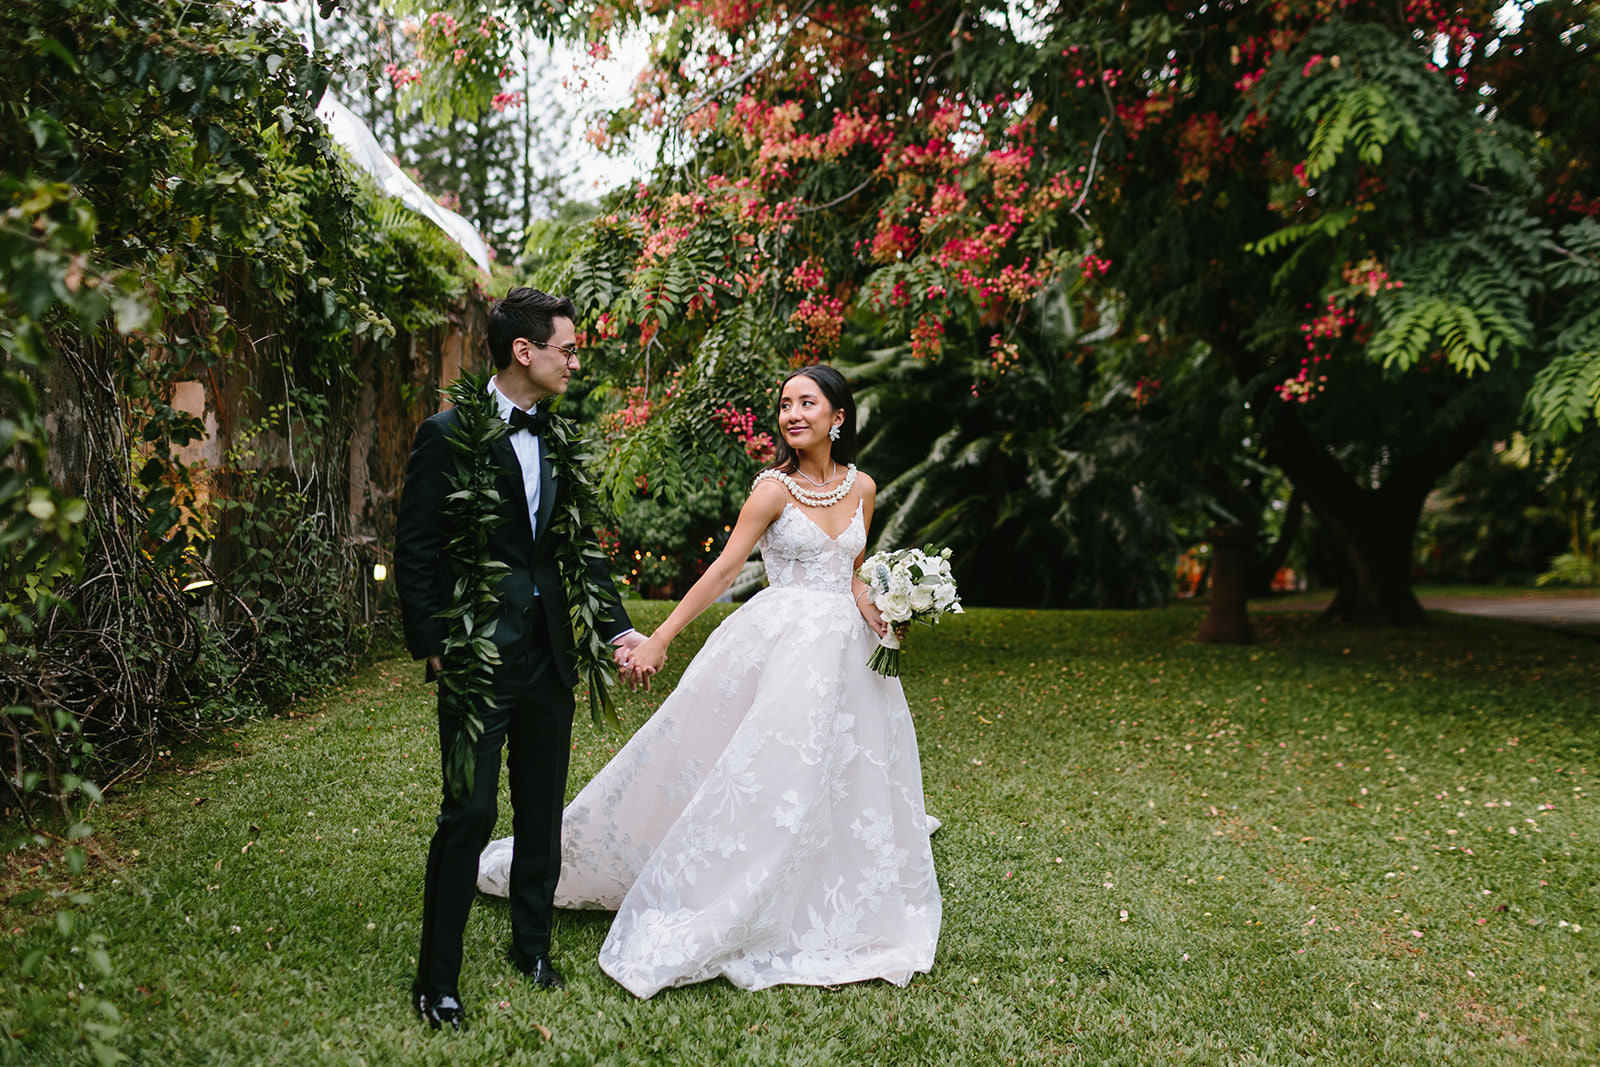 Megan and Nathan's wedding in Maui